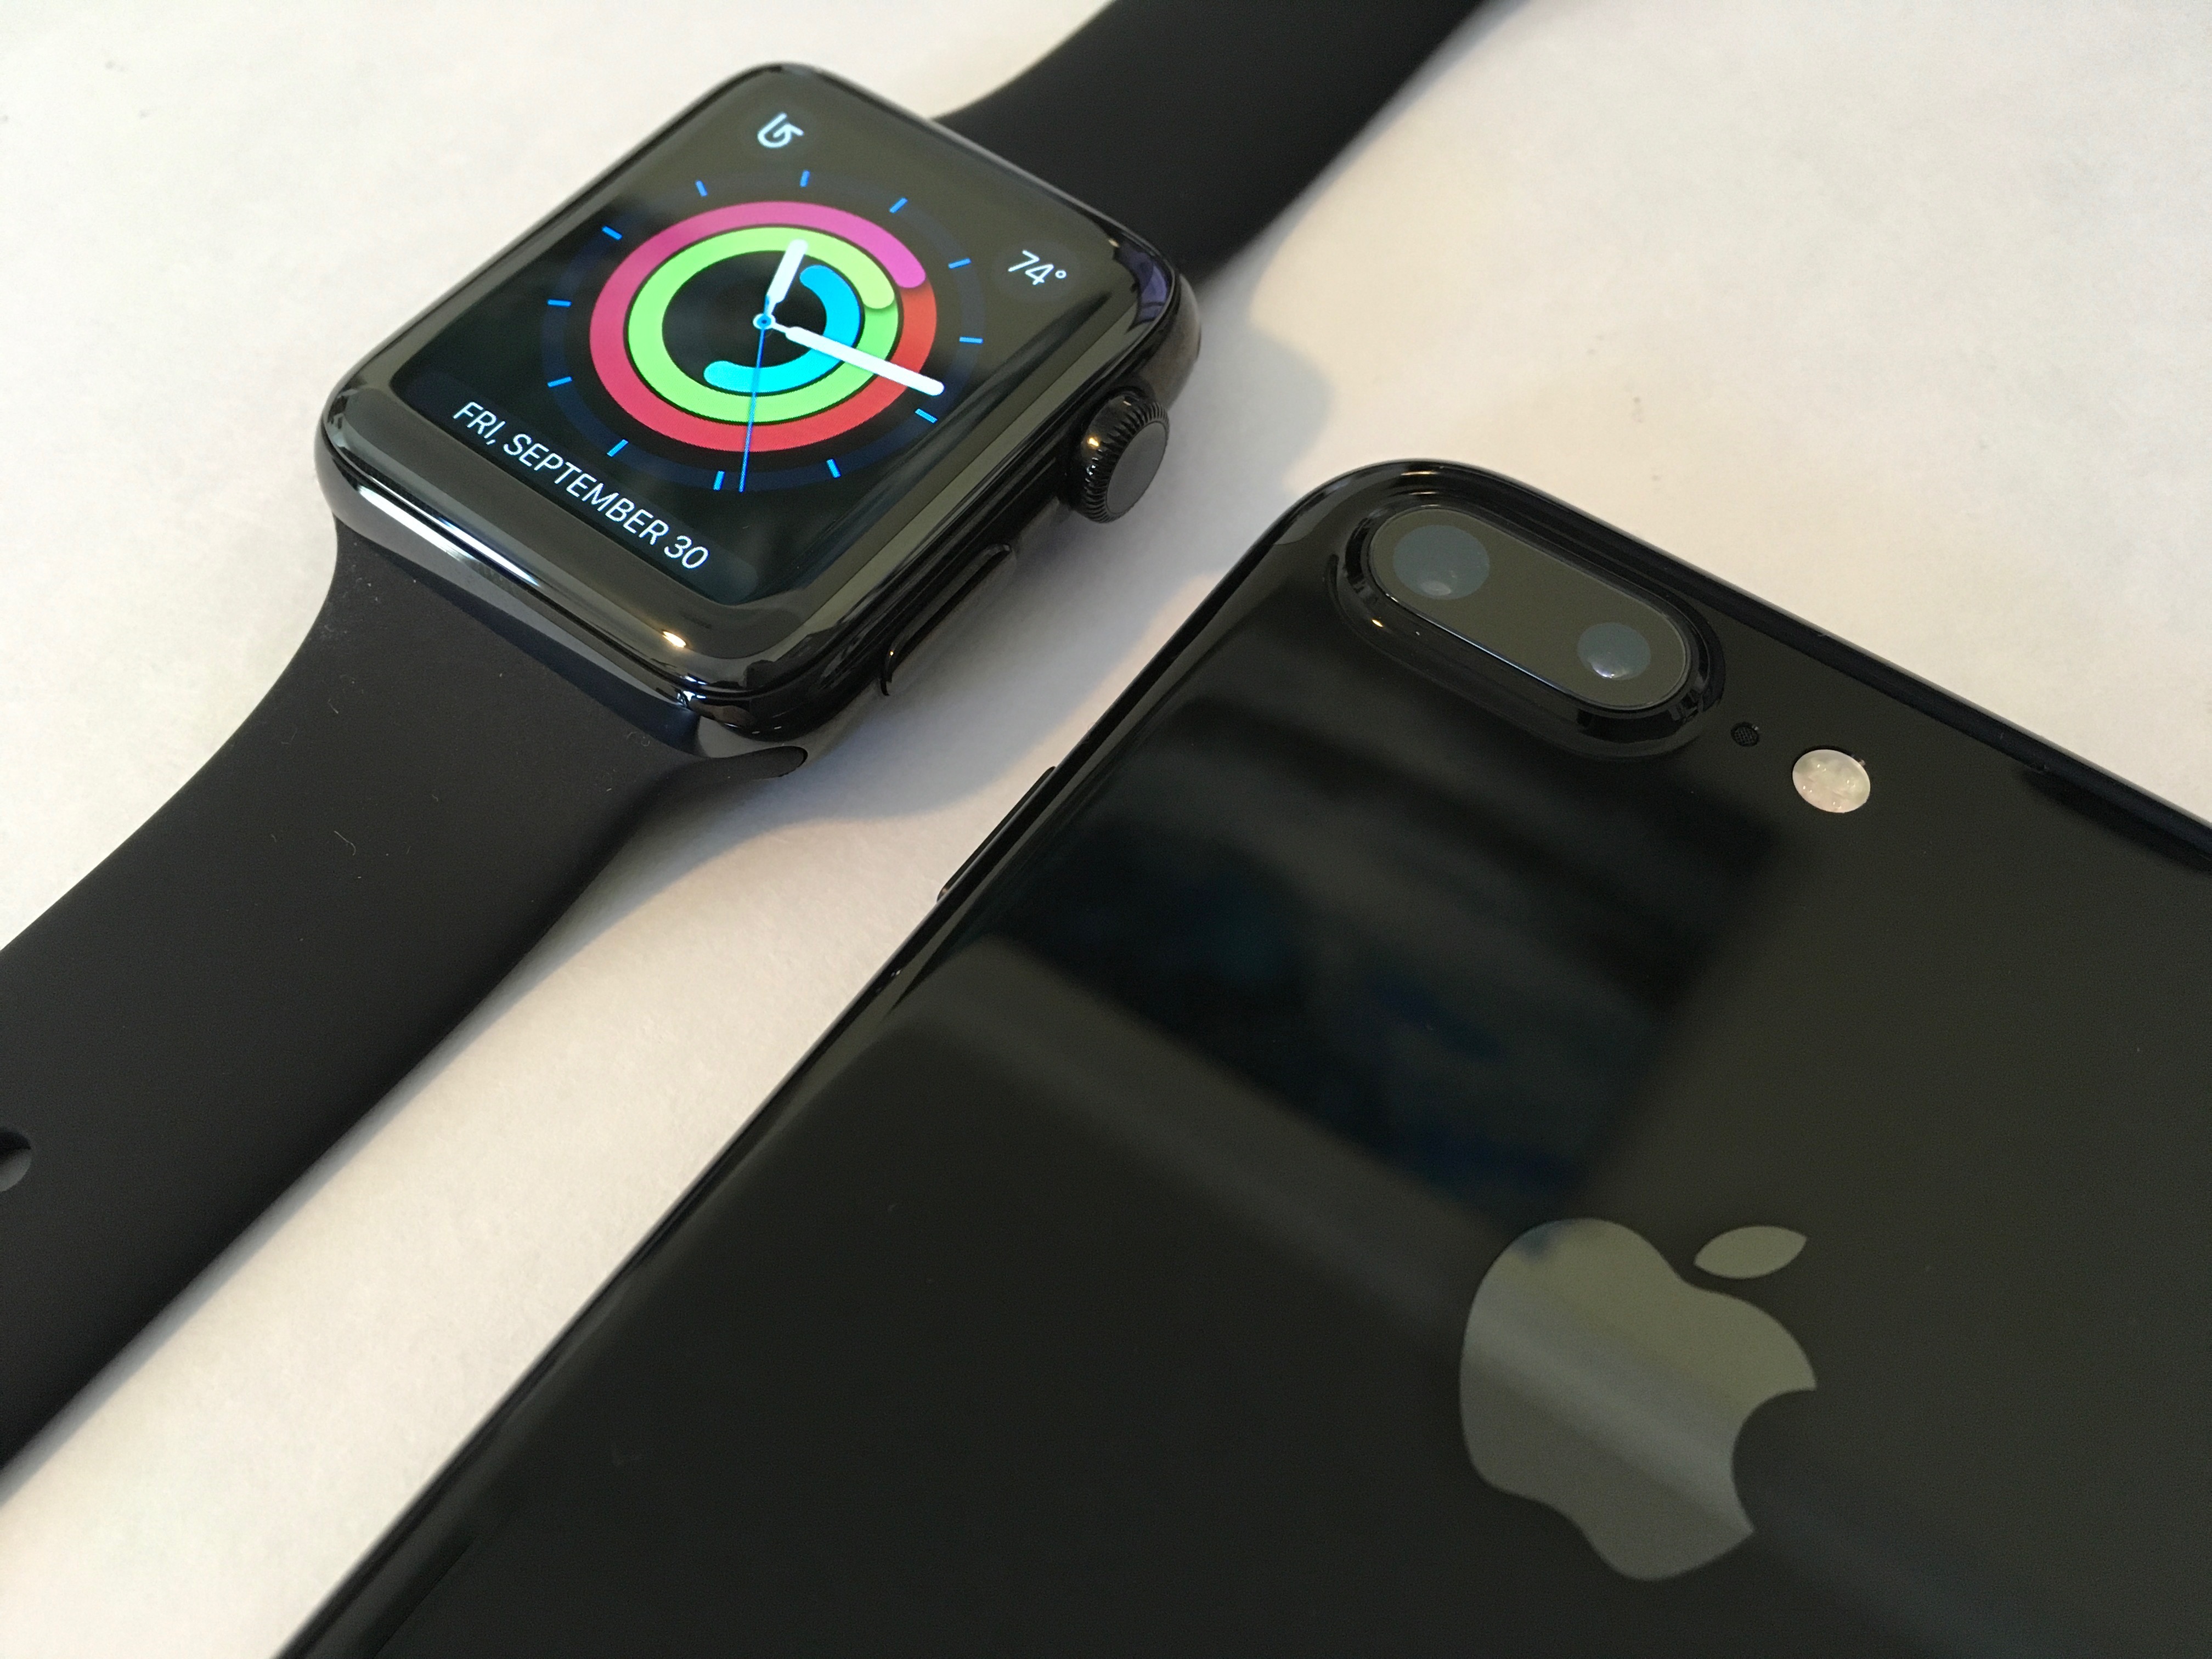 iPhone 7 negro azabache vs Apple Watch negro espacial 7